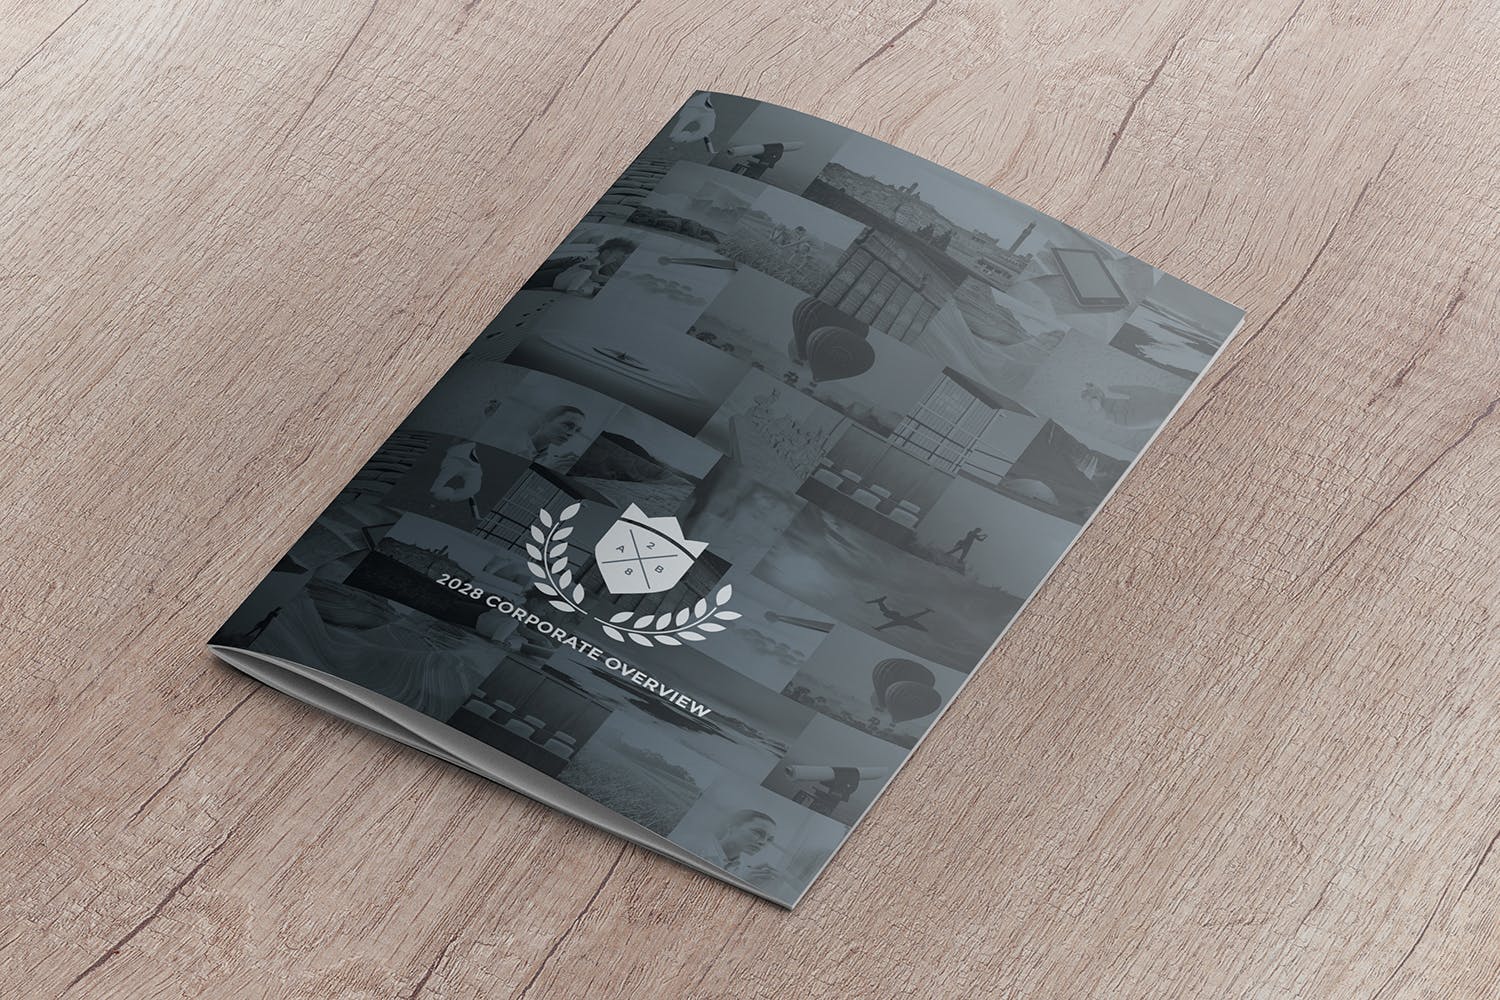 A4尺寸企业/品牌宣传册封面效果图样机素材库精选模板 A4 Brochure Cover Mockup Perspective View插图(2)